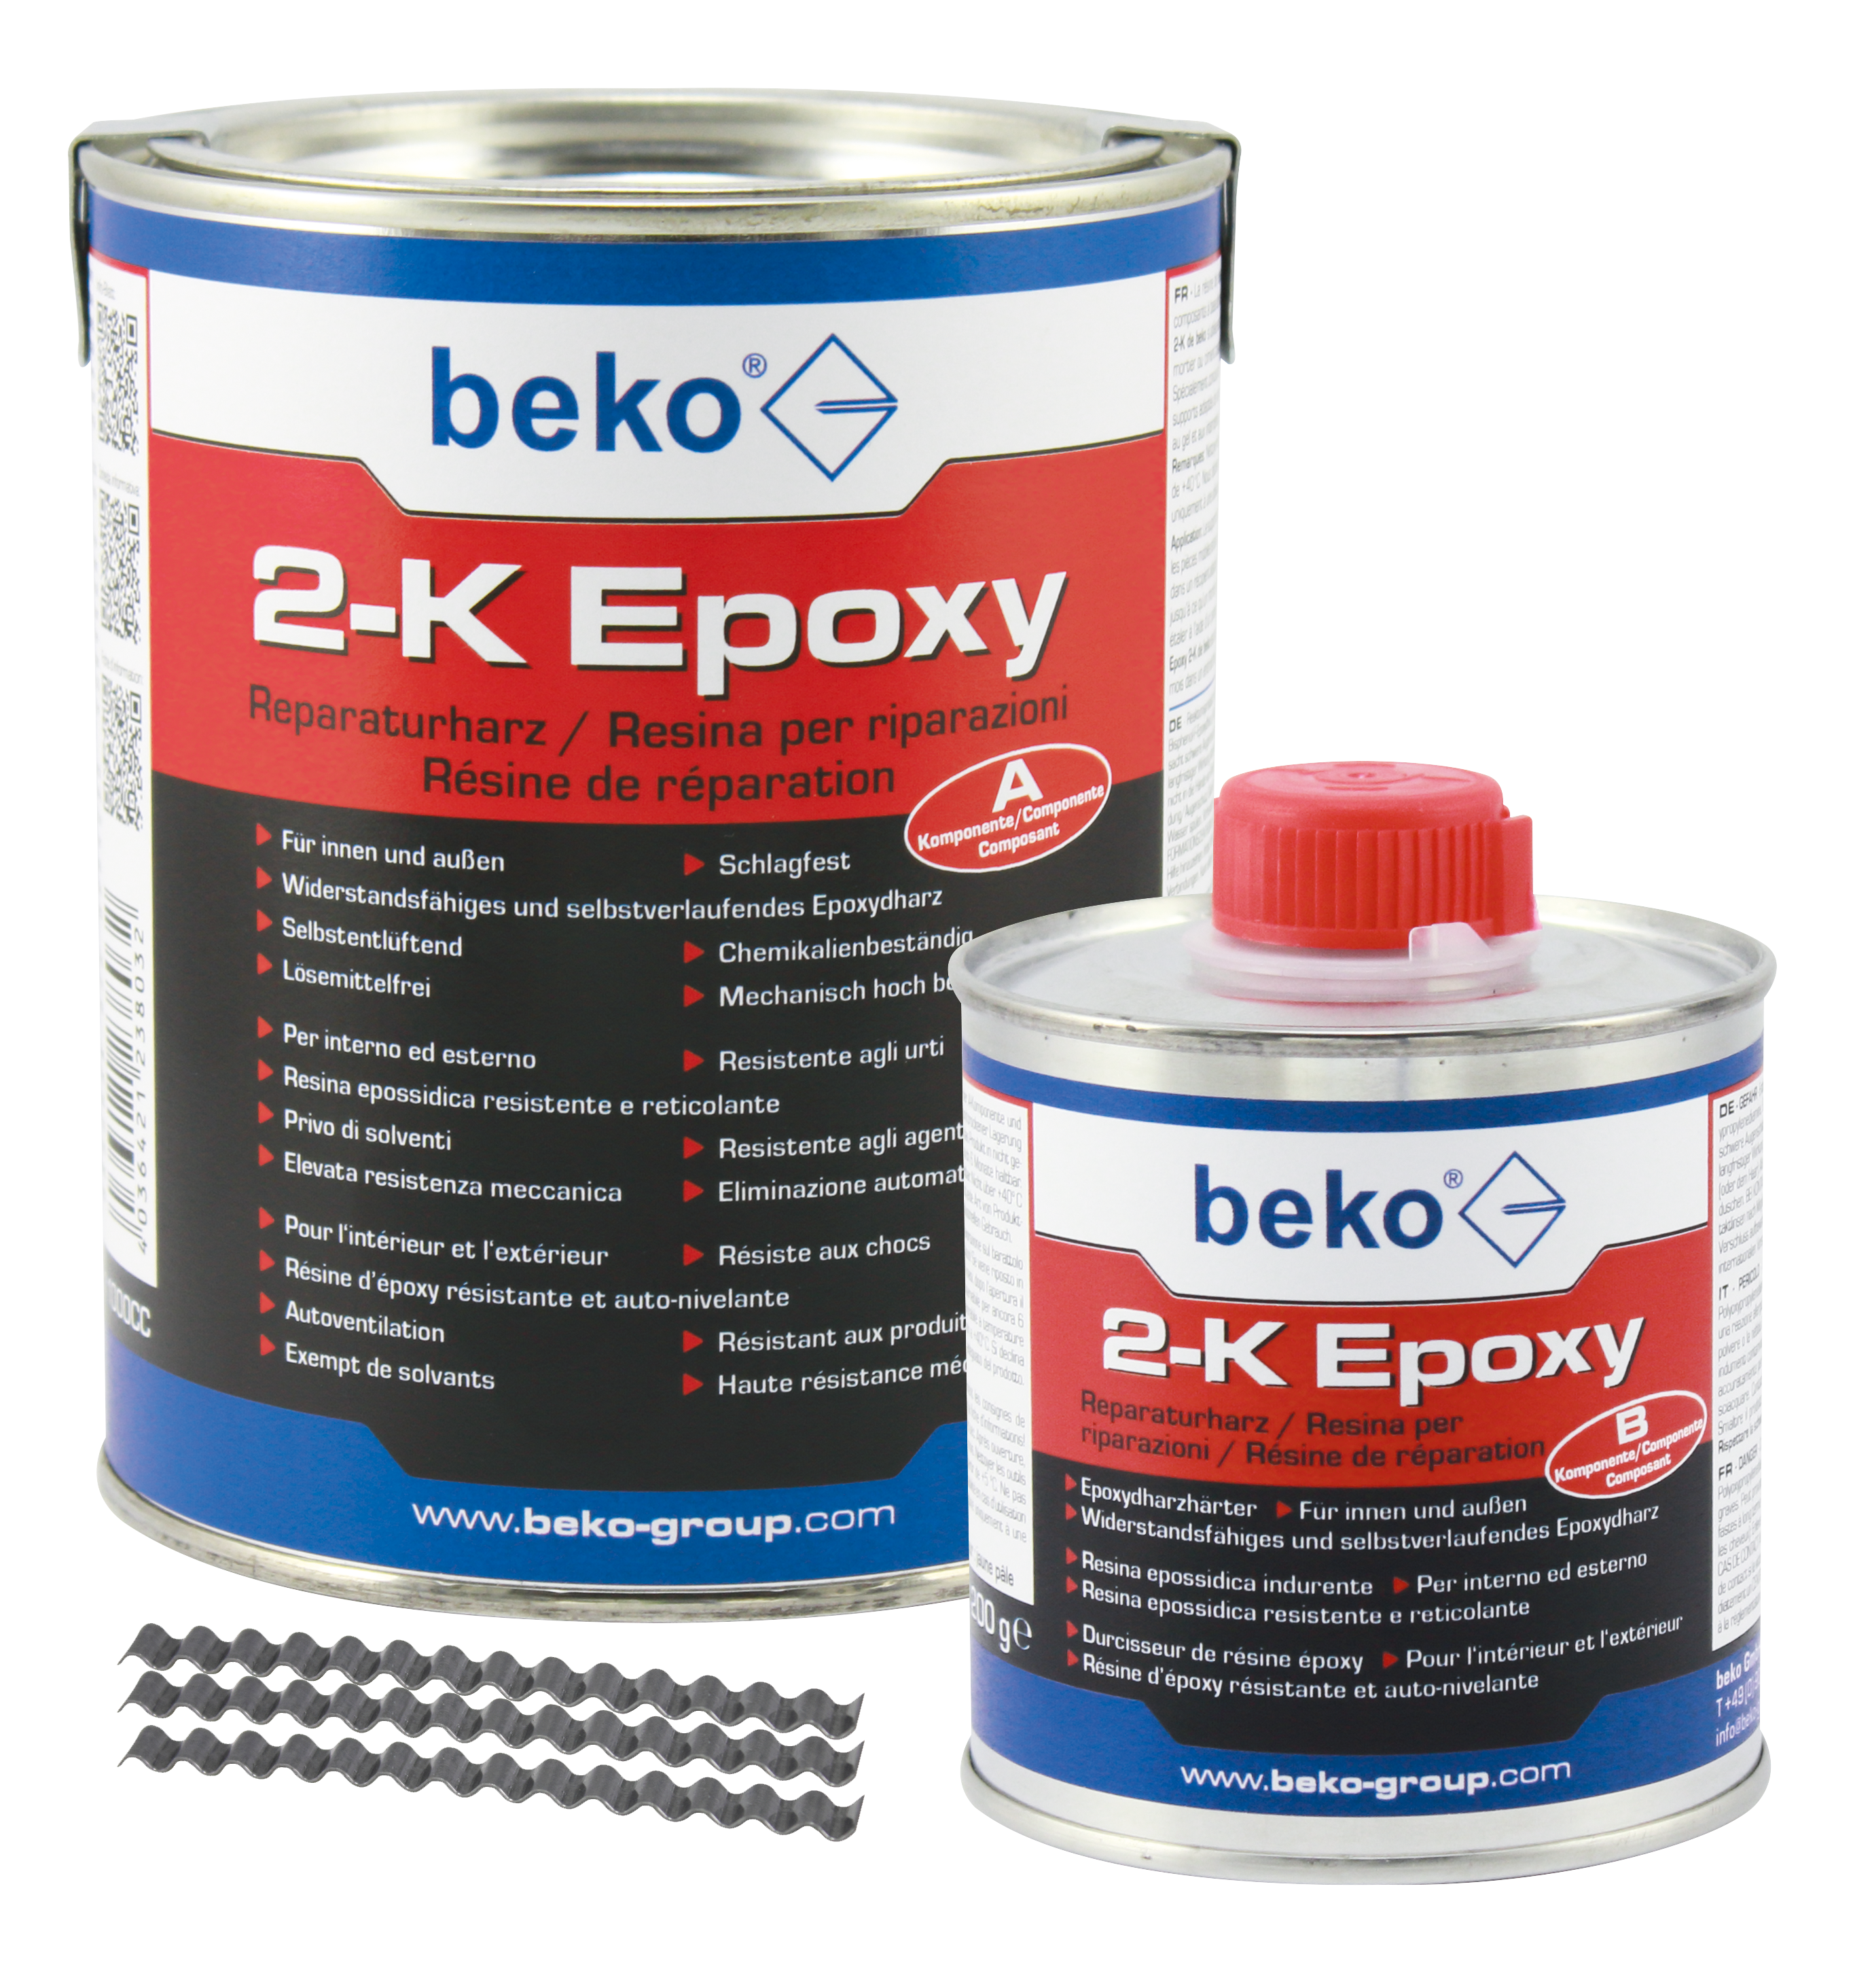 Beko 2-K Epoxy Reparaturharz 1 kg betongrau